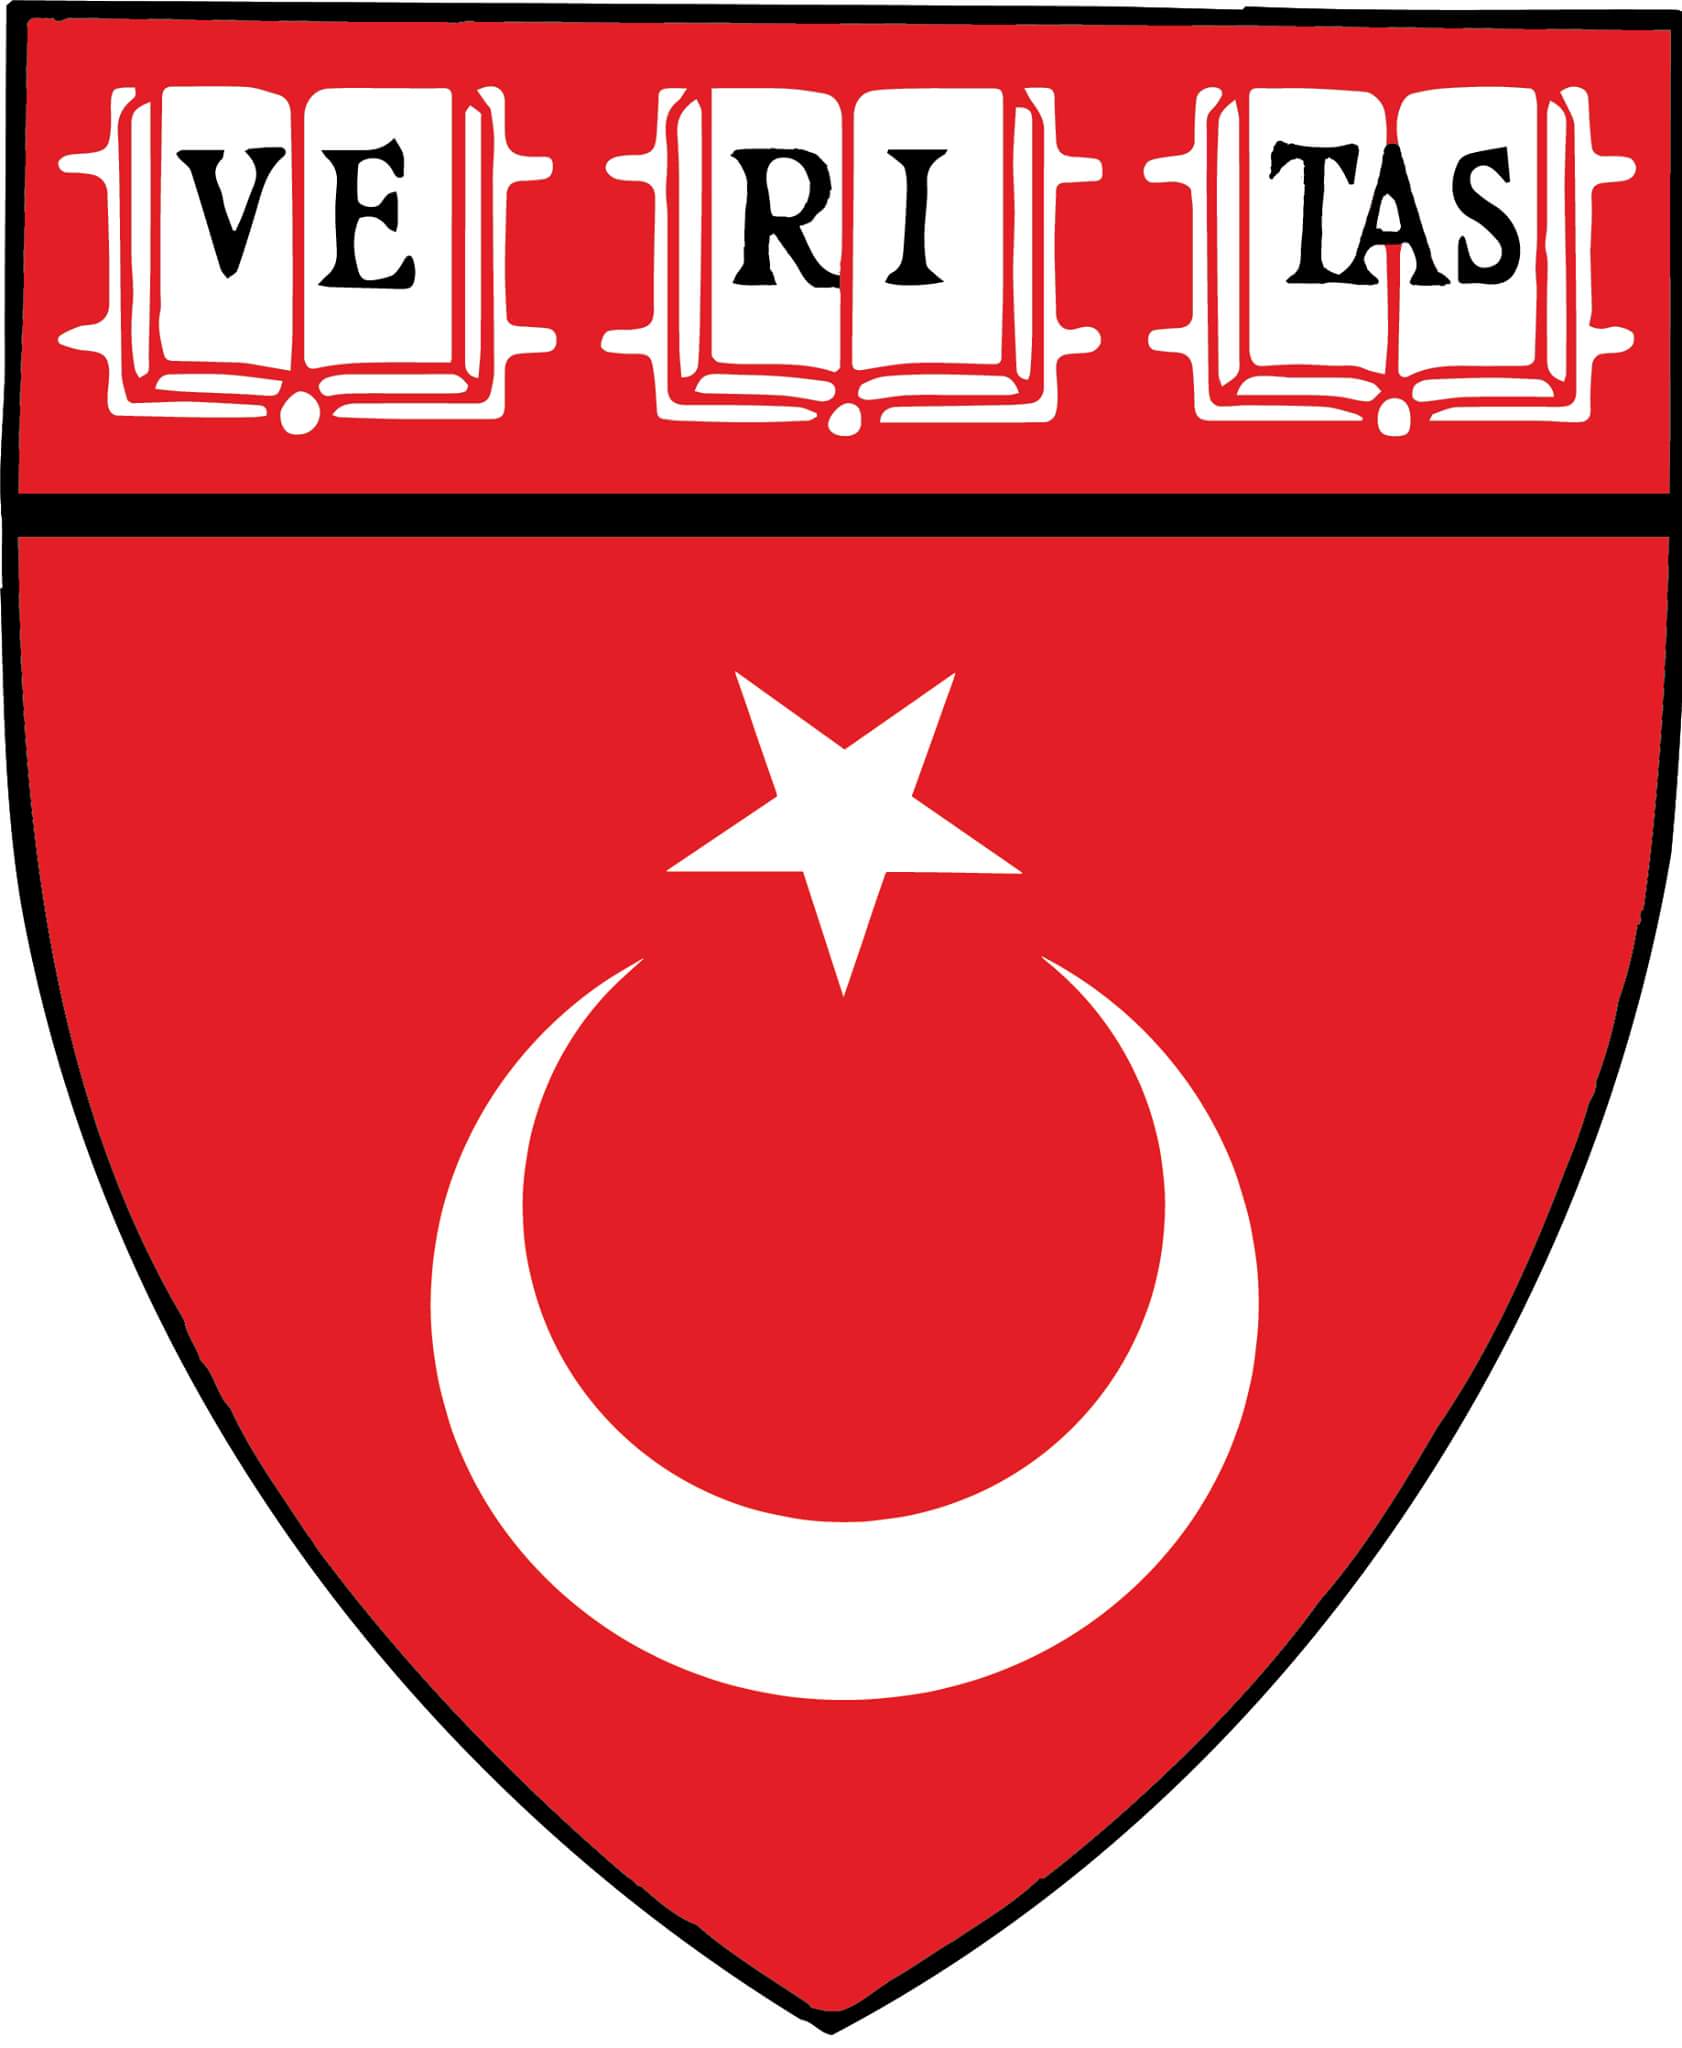 Harvard College Turkish Student Association